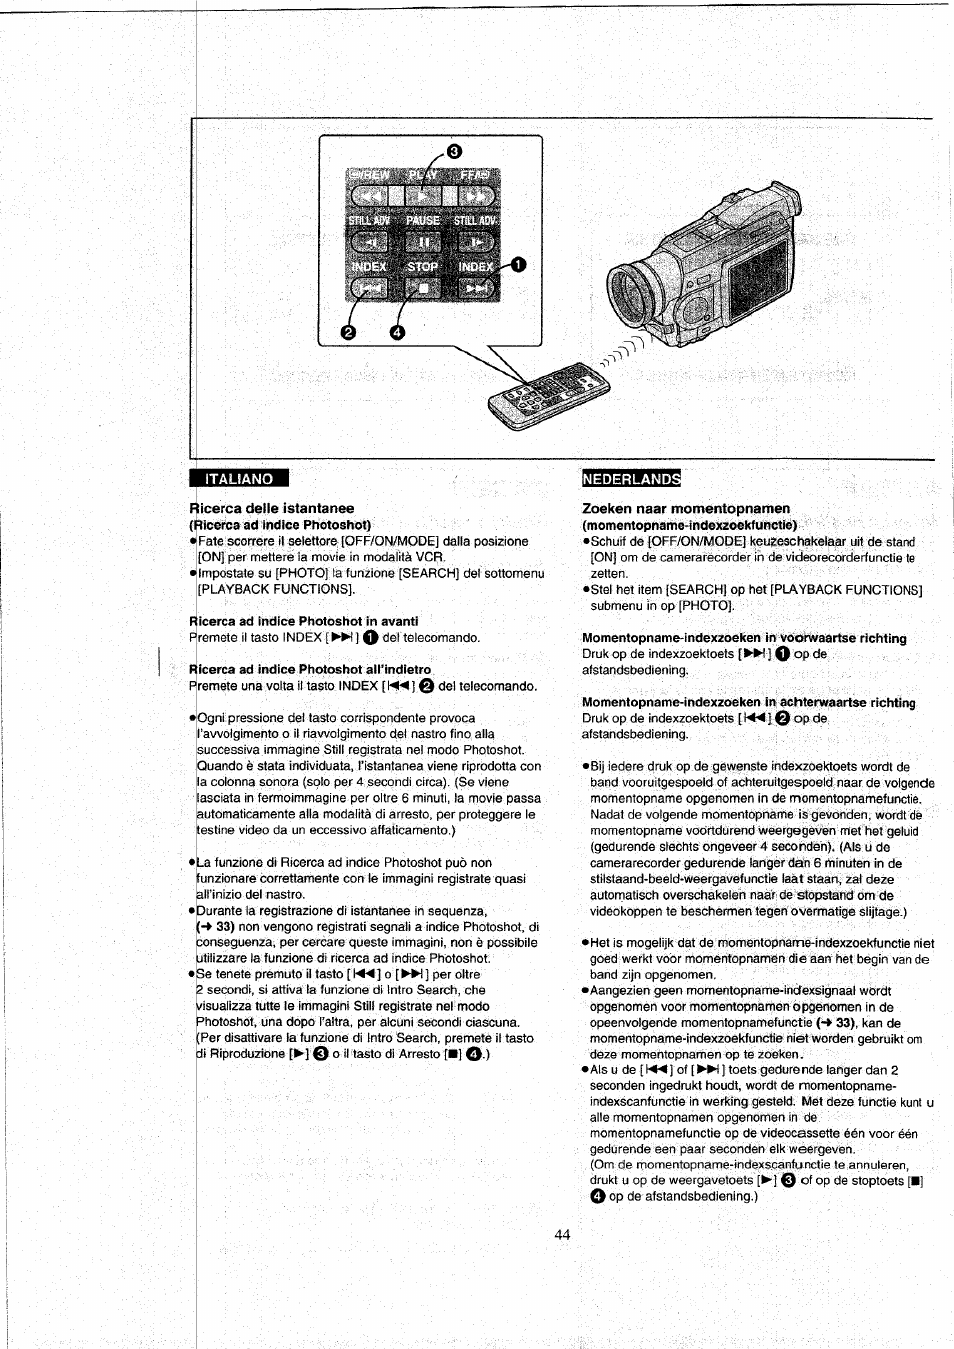 Nederland | Panasonic NVMX7 Manuale d'uso | Pagina 44 / 136